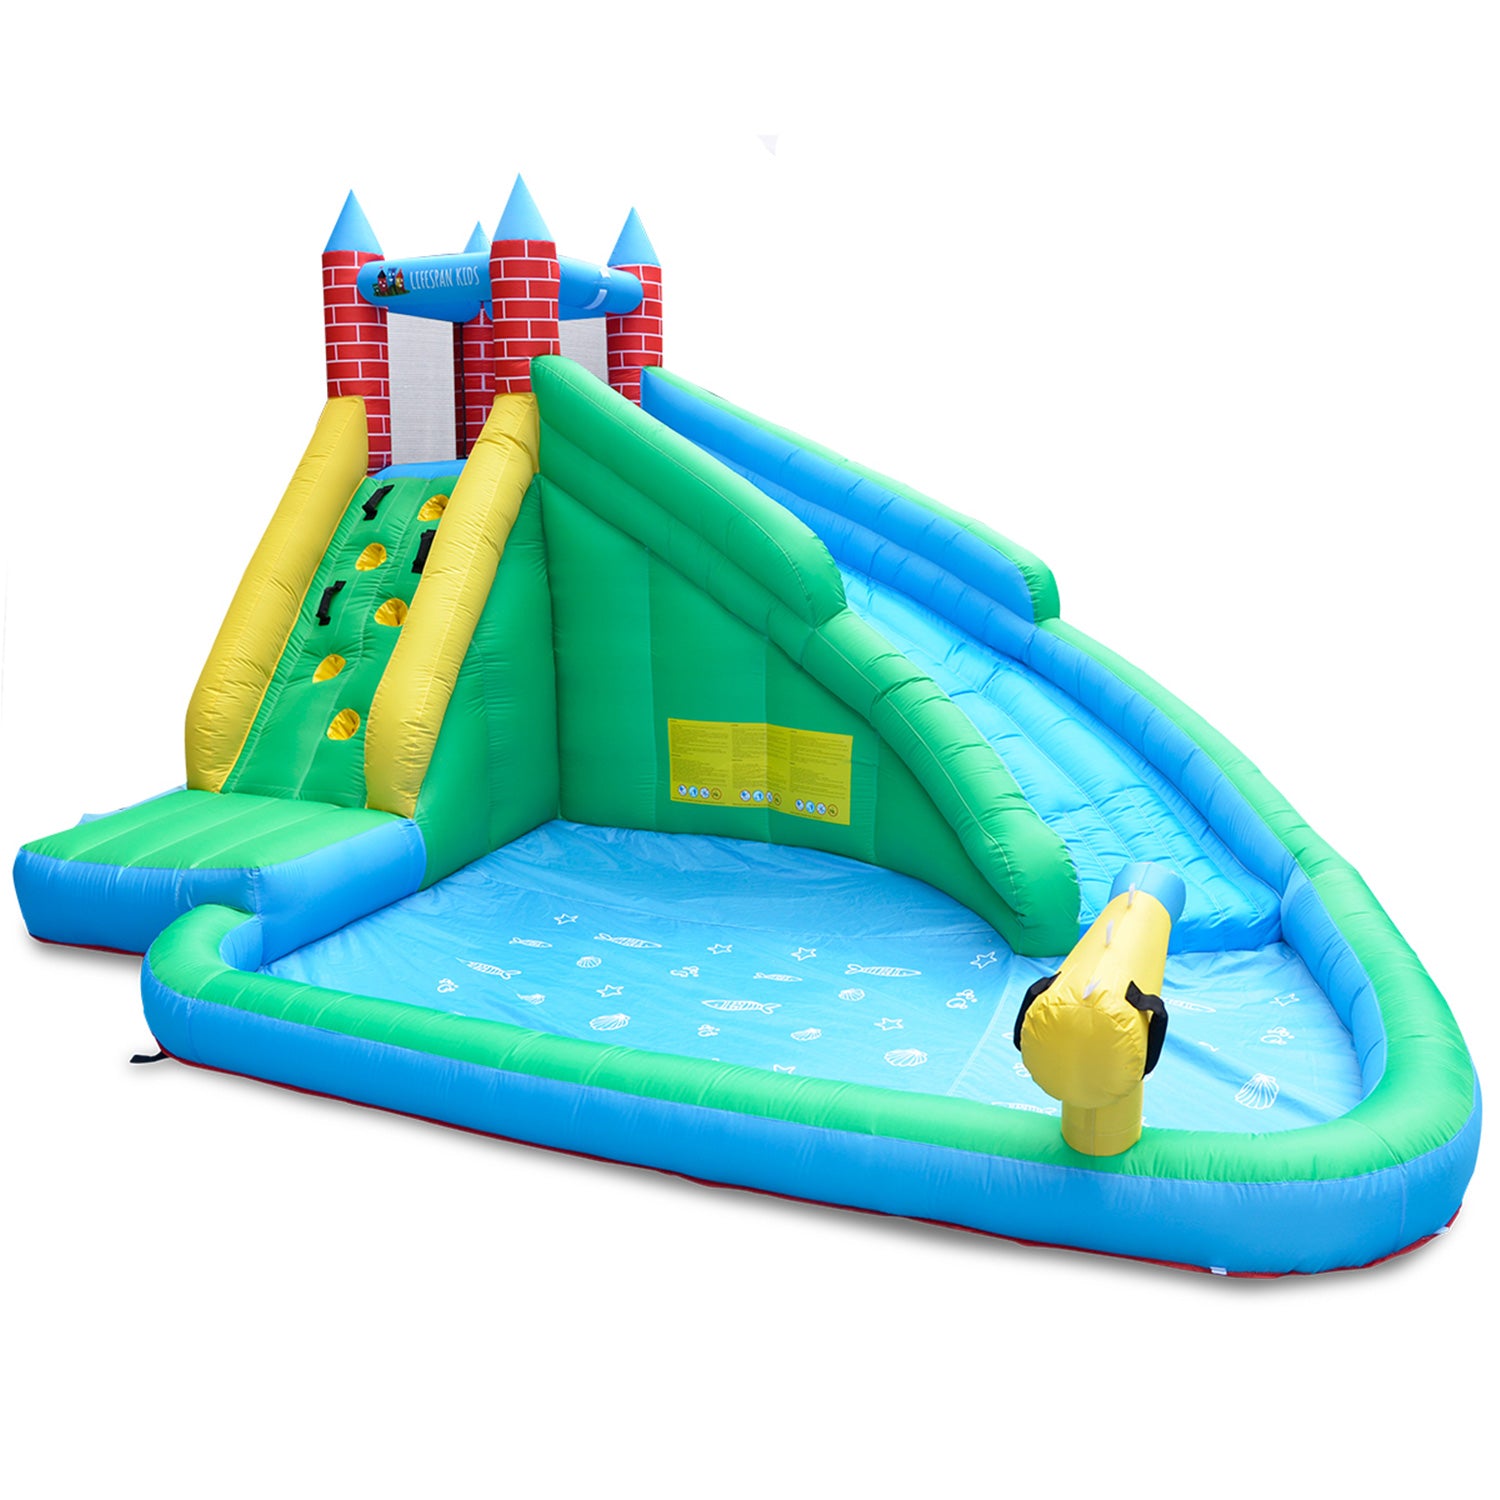 Lifespan Kids Windsor 2 Slide & Splash - 0